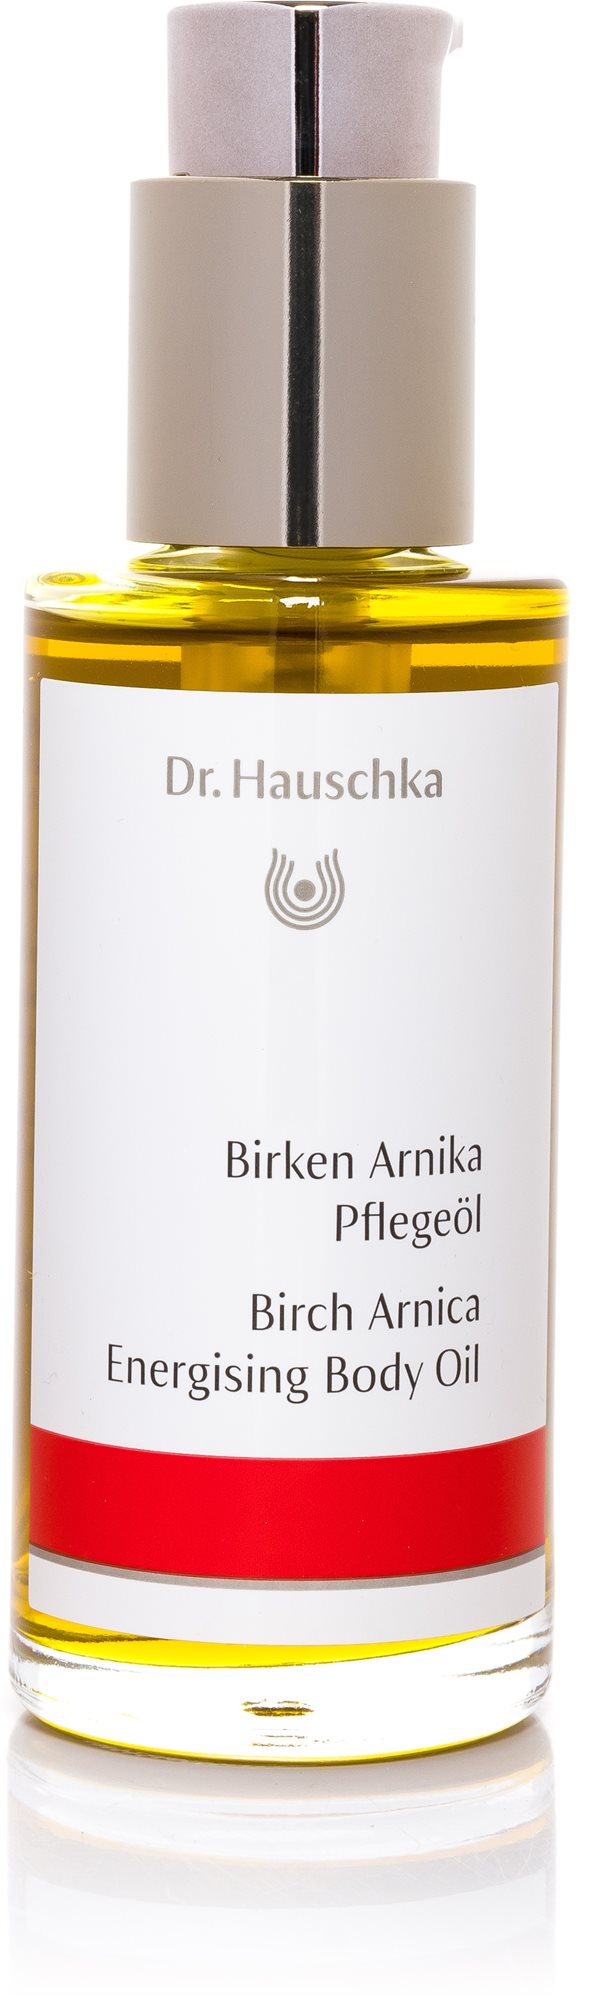 DR. HAUSCHKA Birch Arnica Body Oil 75 ml